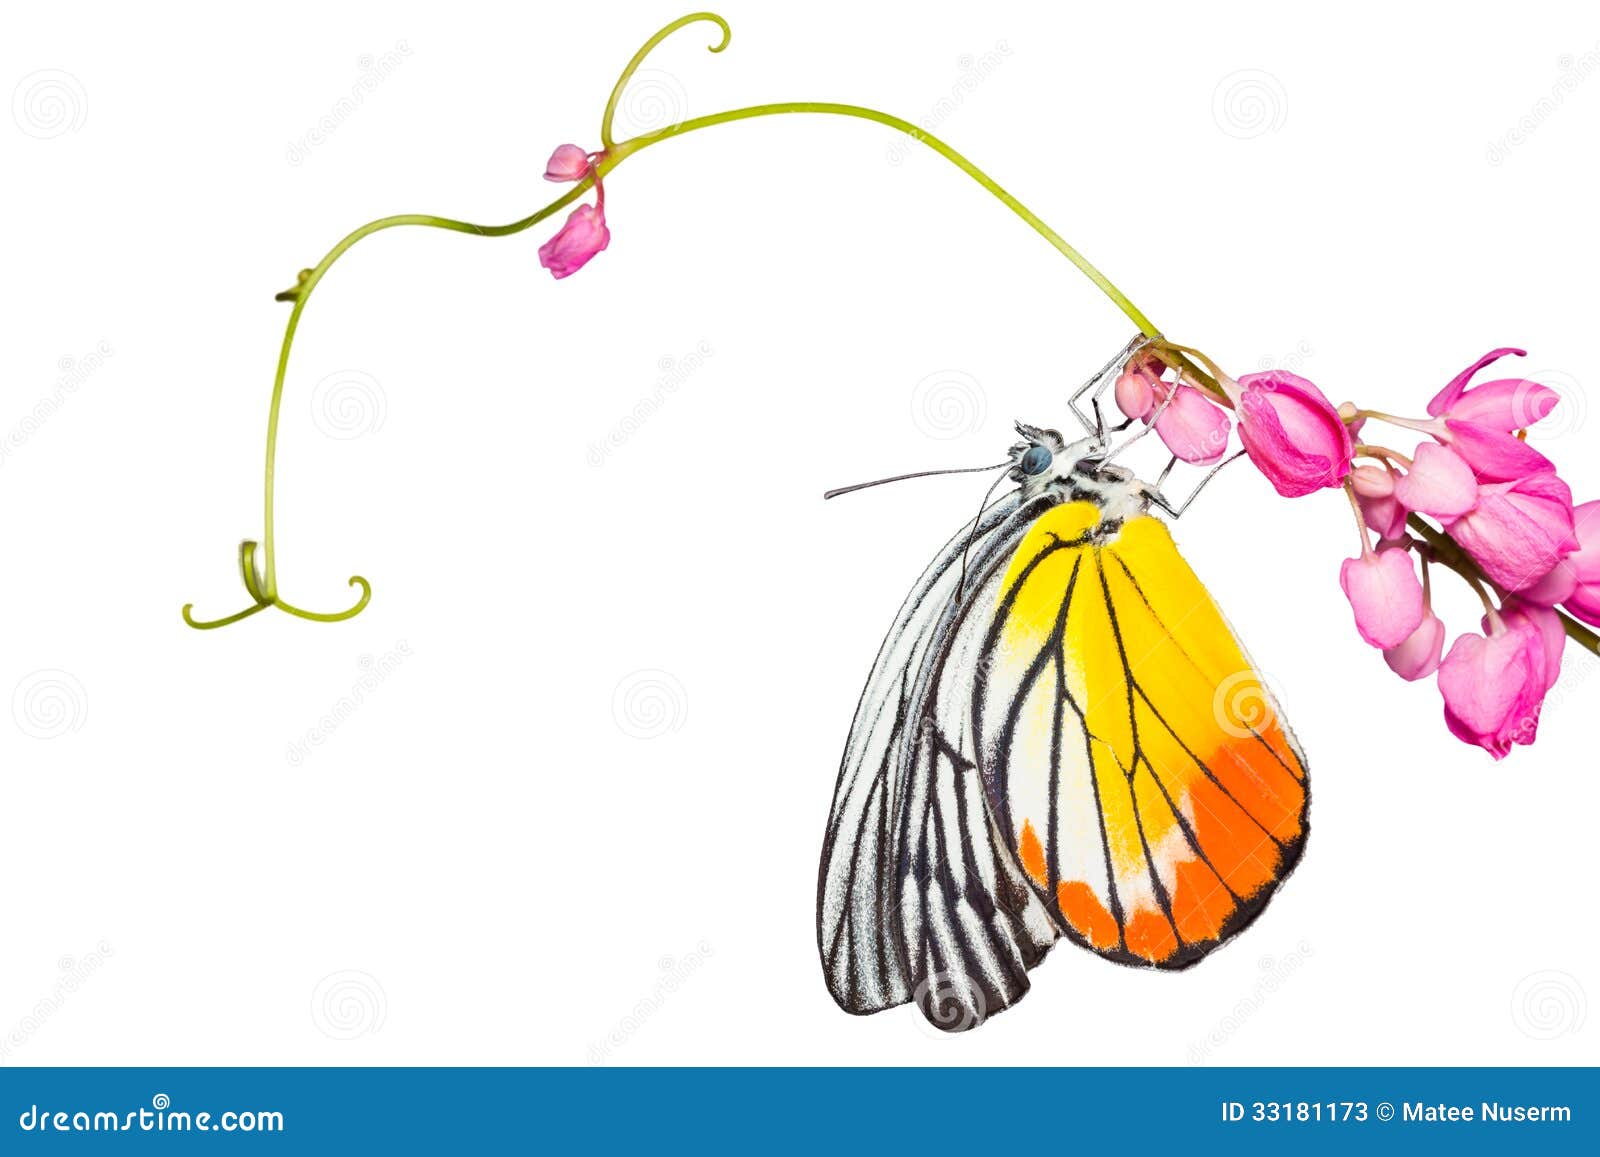 painted jezebel butterfly